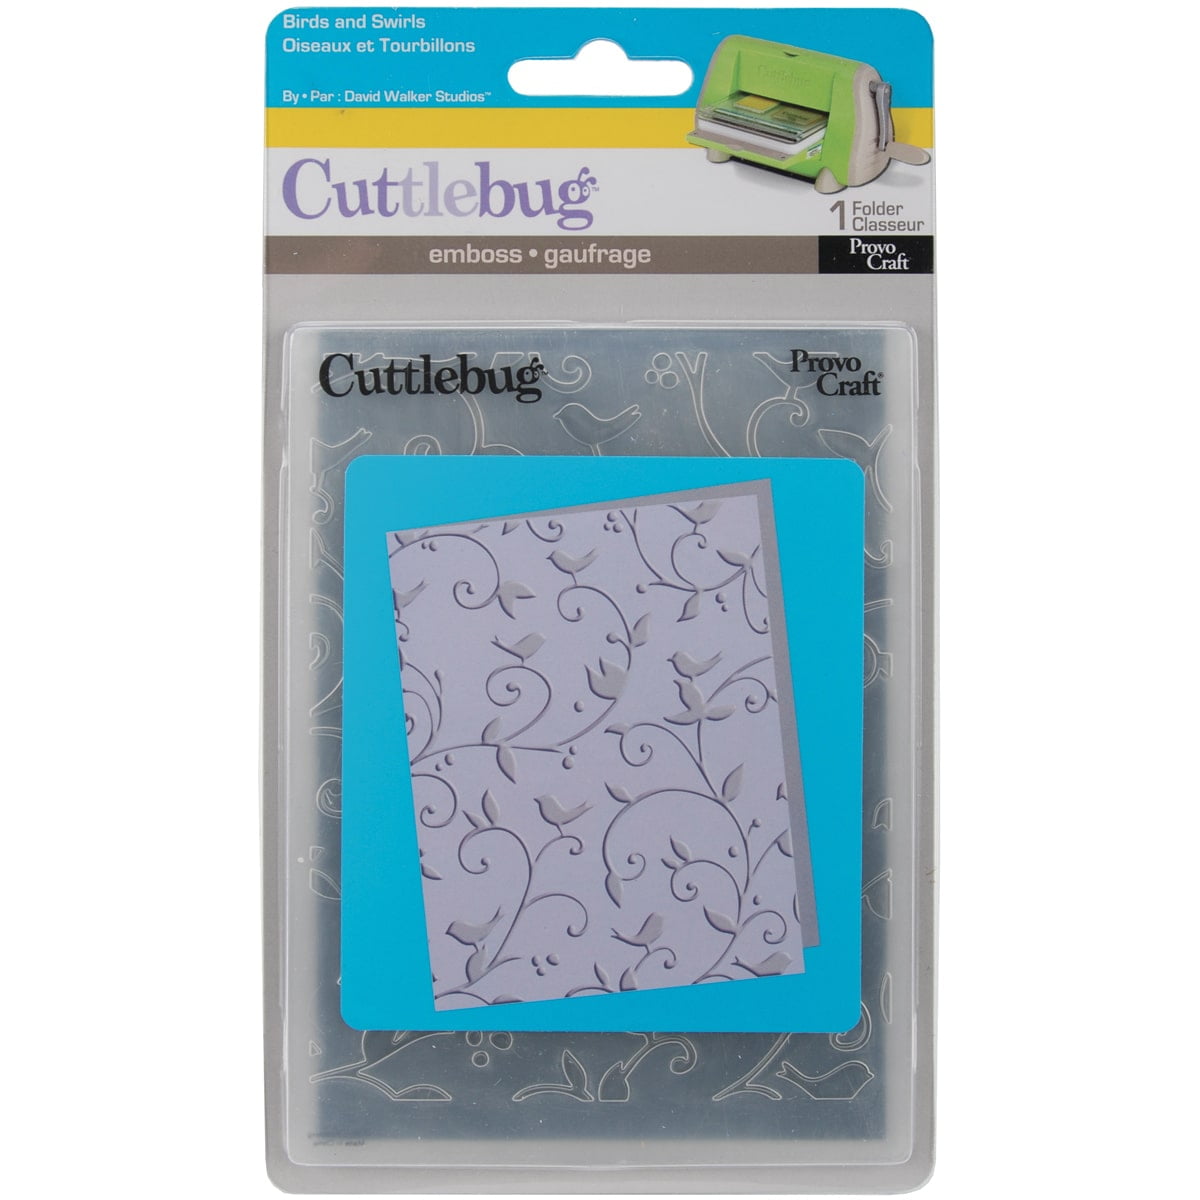 Cuttlebug Embossing Folder Decorative Squares 2 2x 